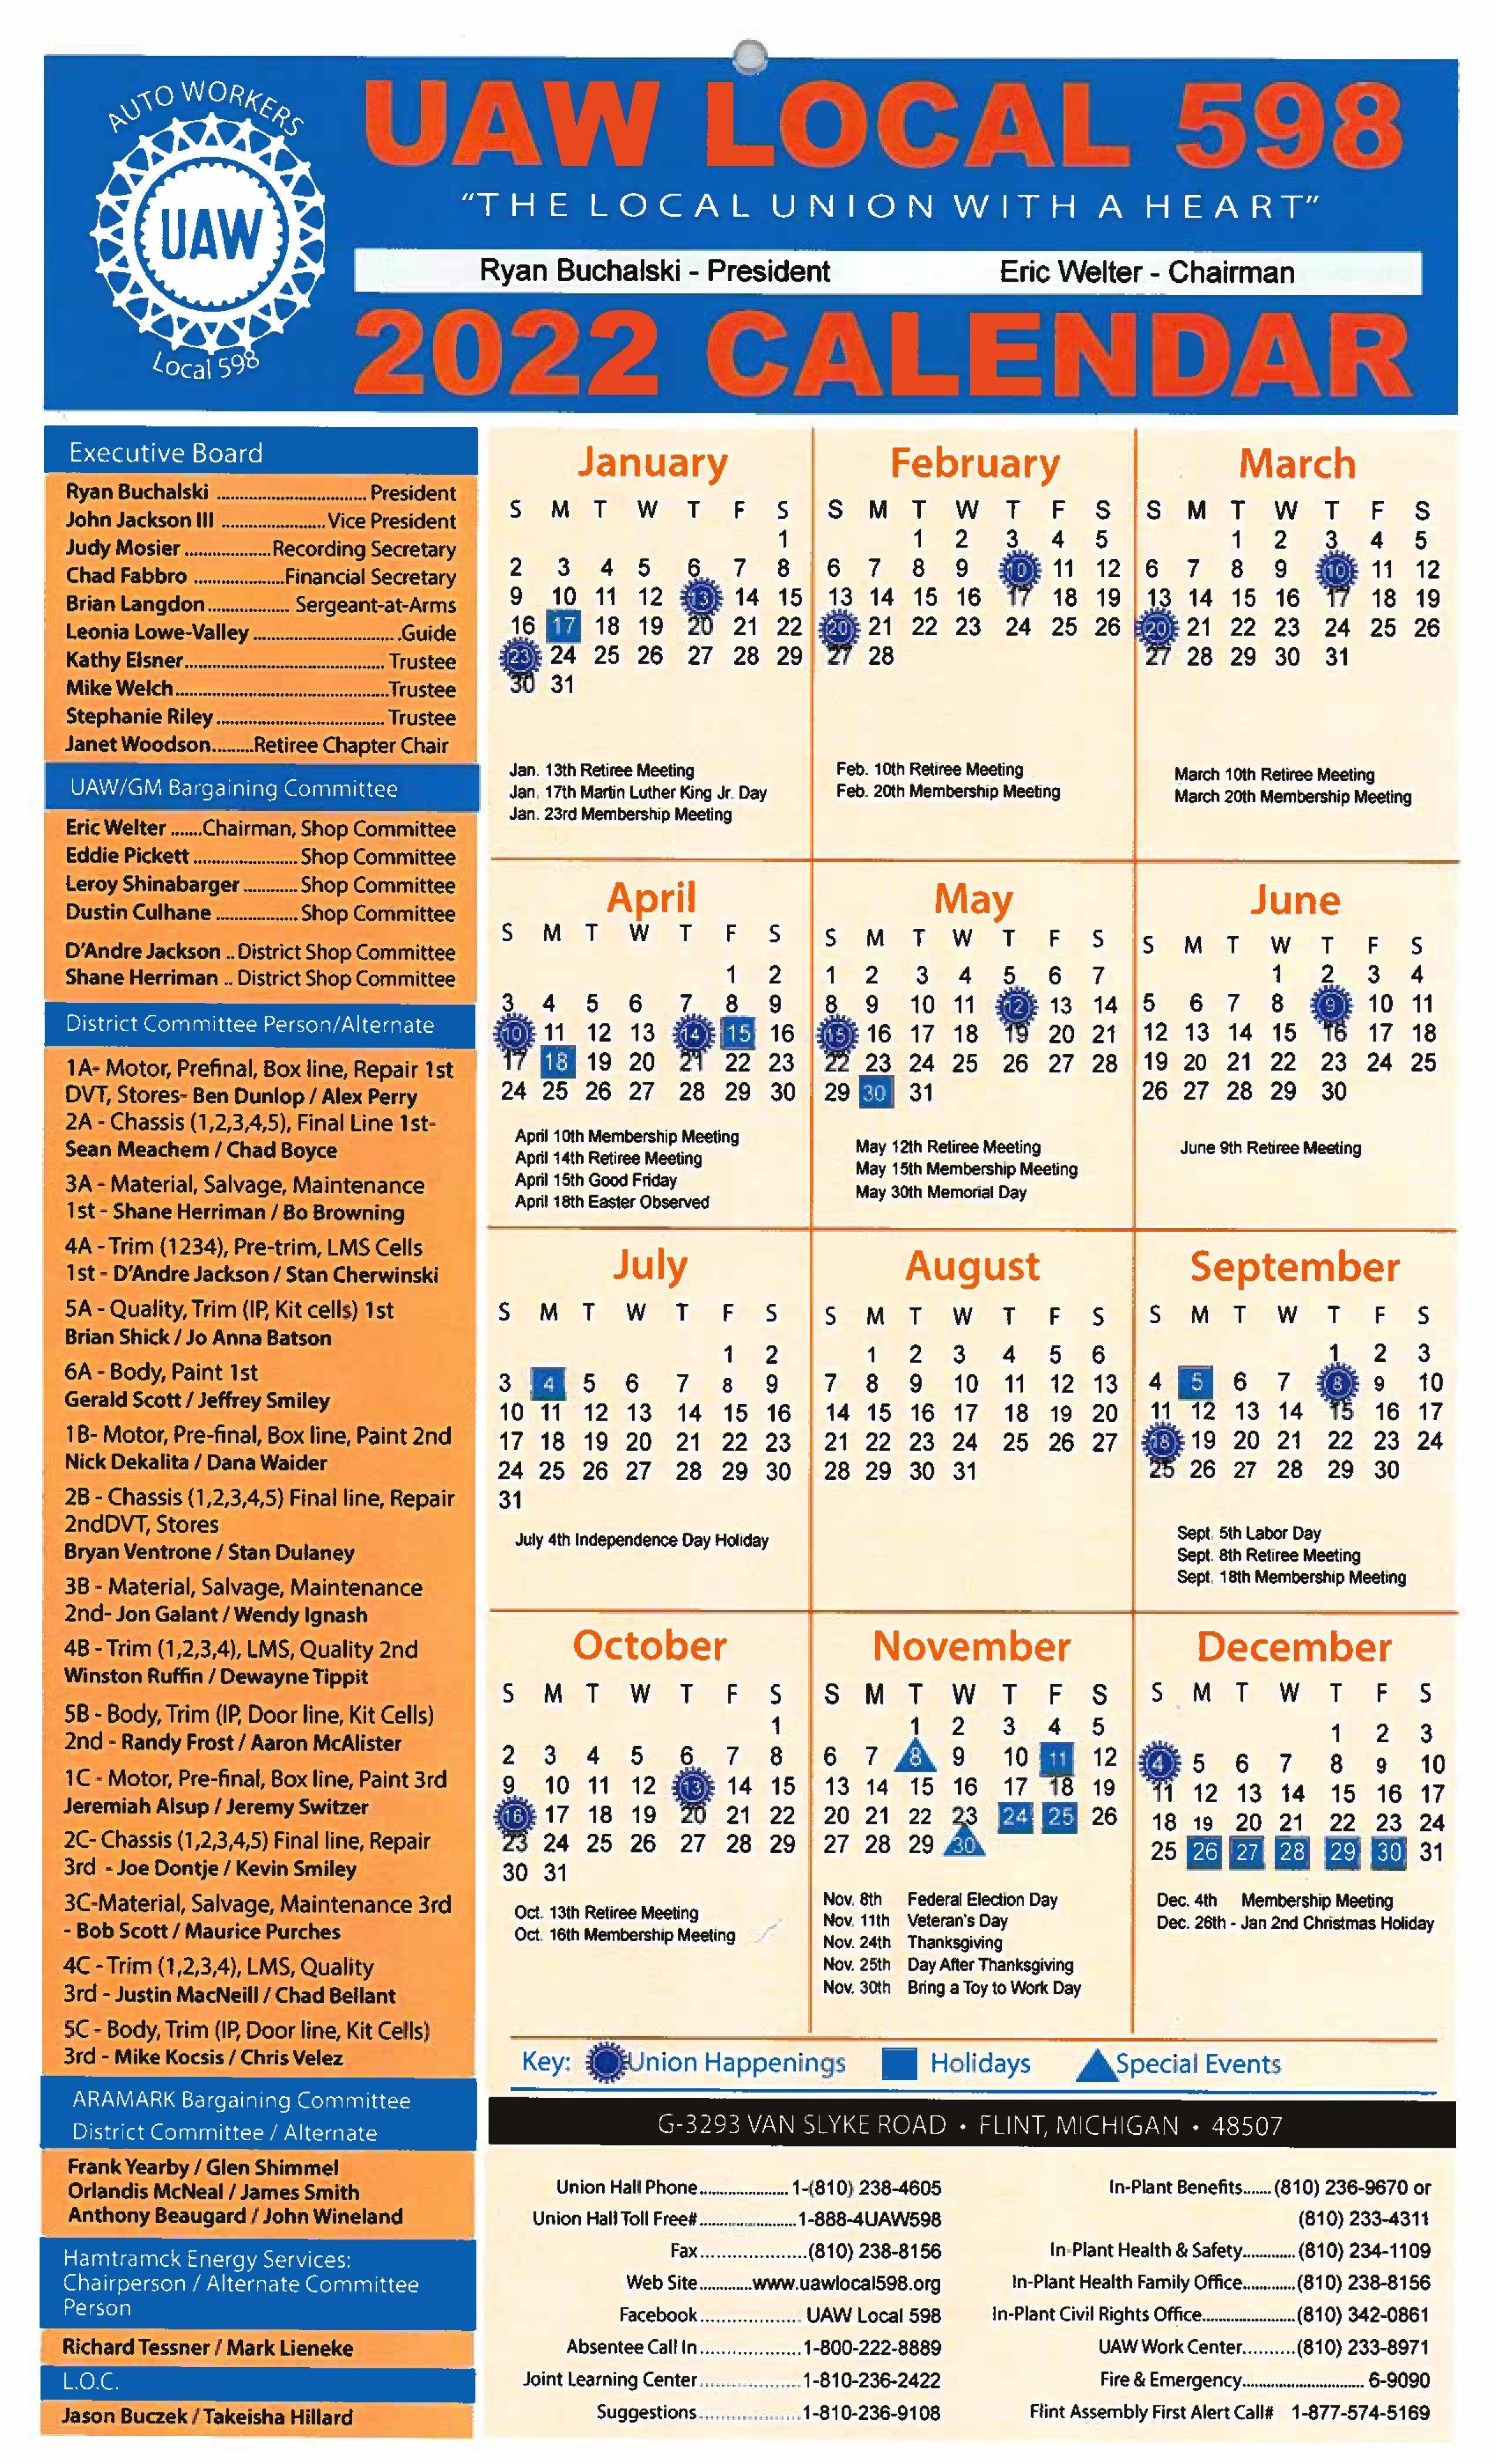 General Motors Holiday Calendar 2022 2022 Calendar | Local 598